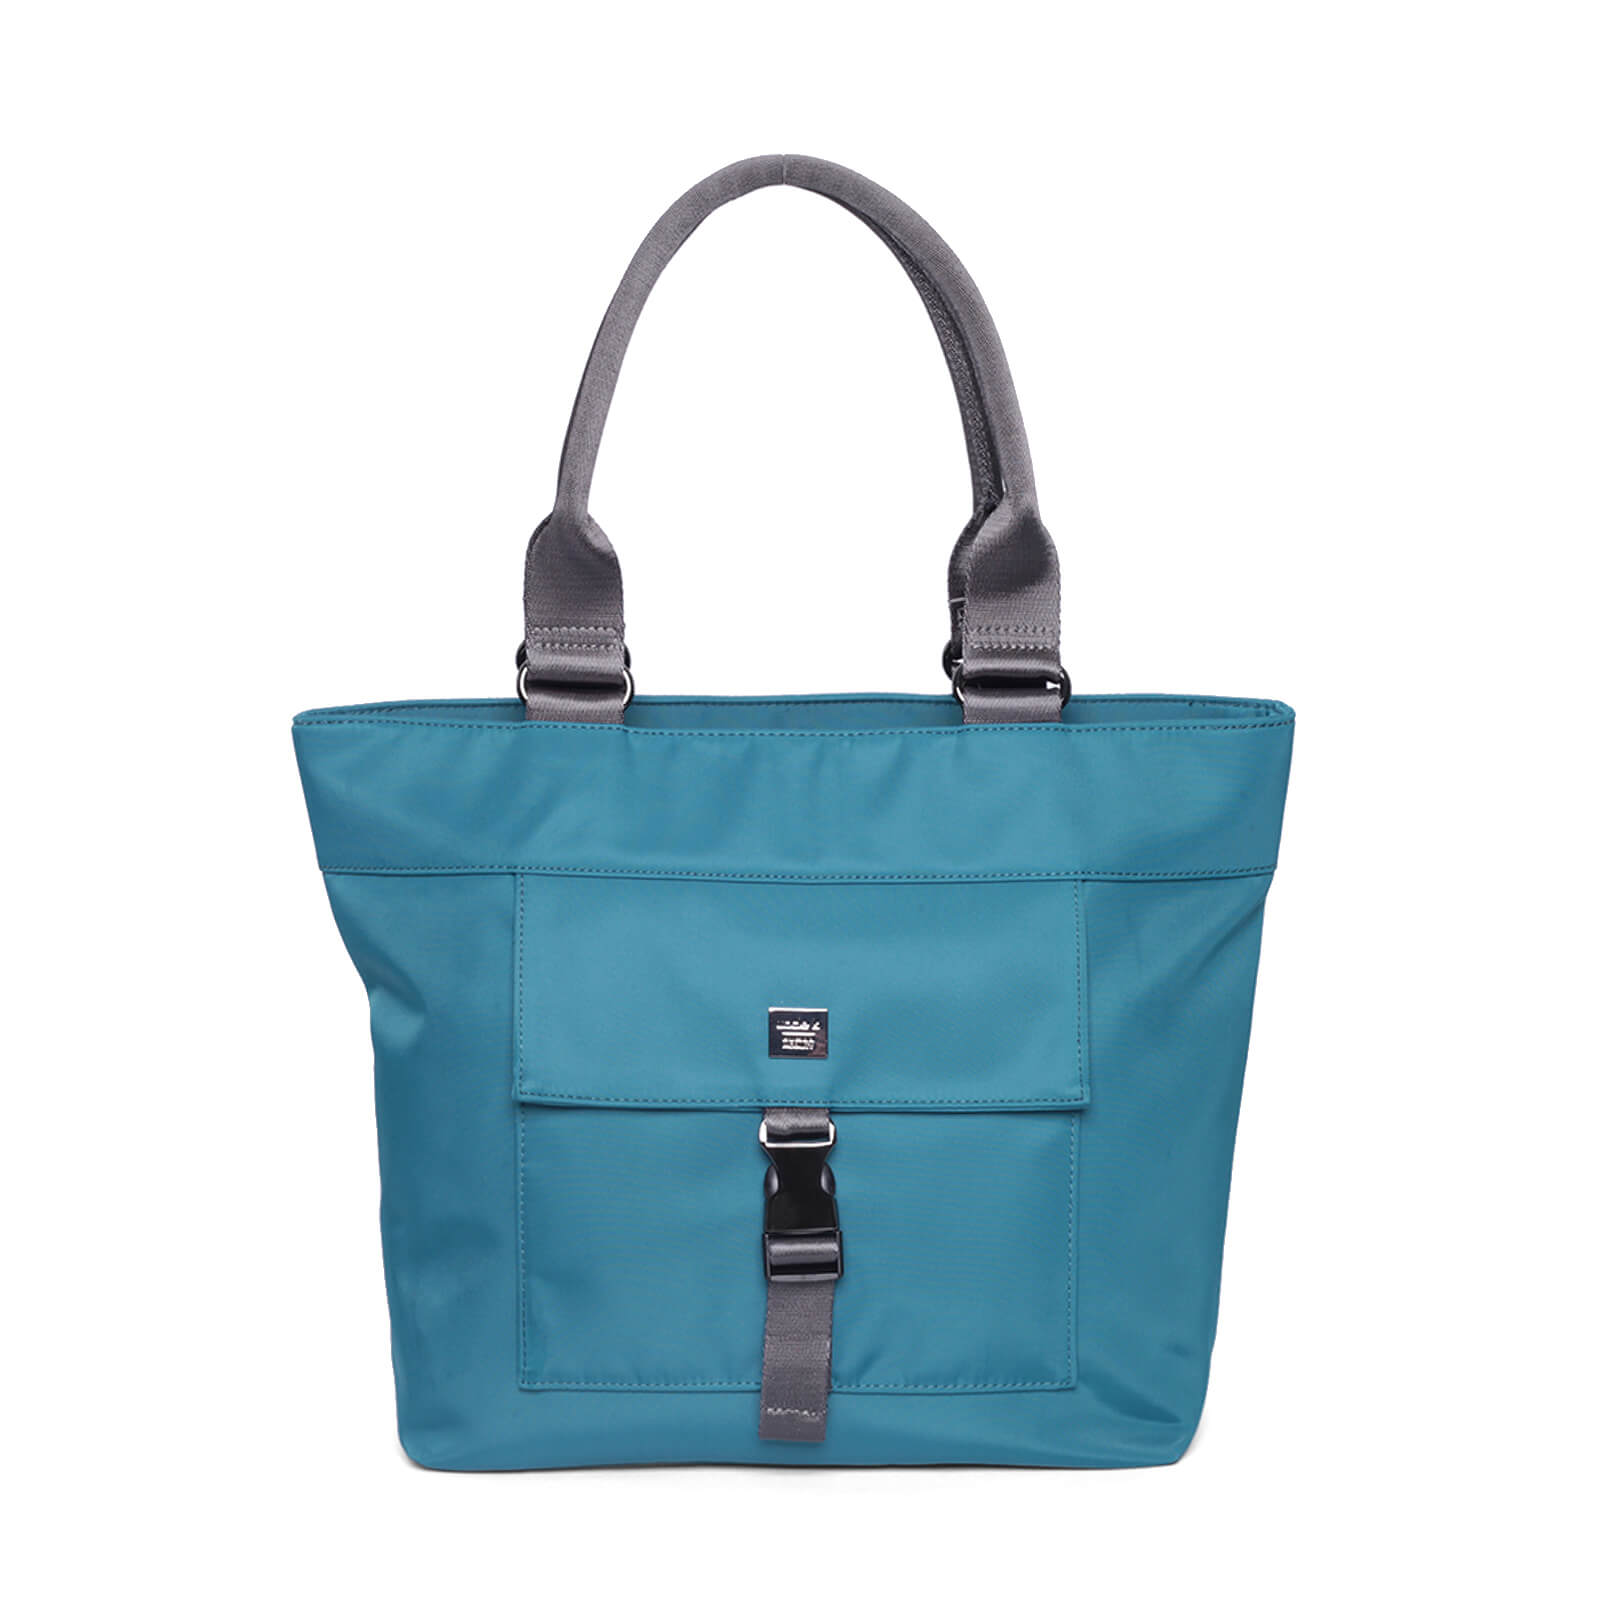 bolsa-shopping-bag-nylon-bnt-61039-unclek-azul-1